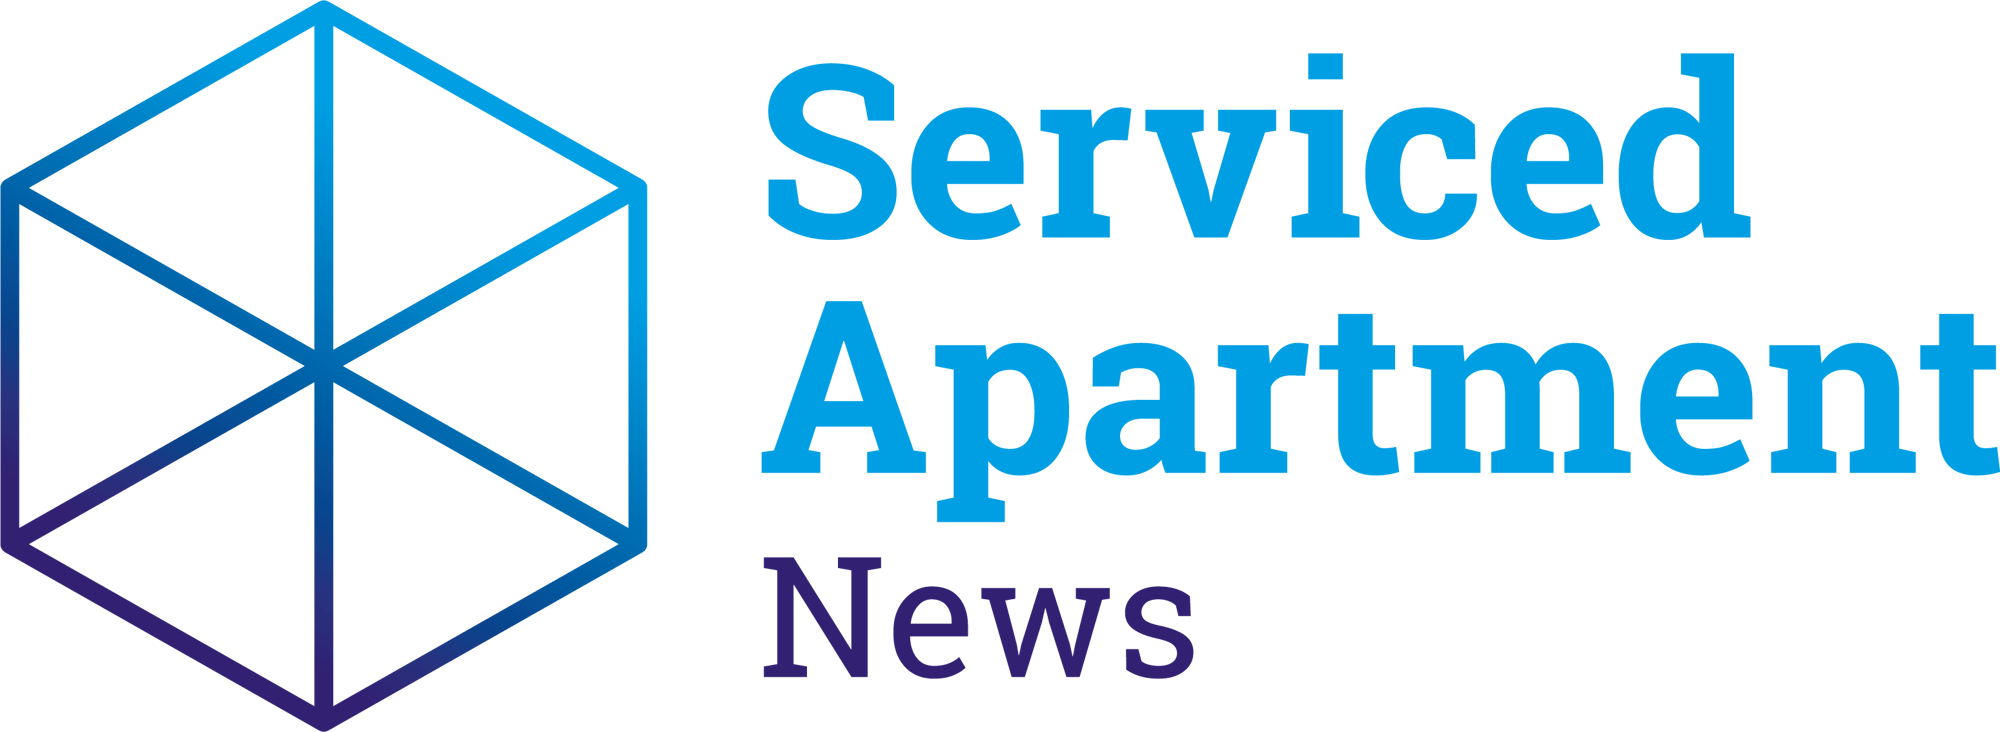 serviced apartment news logo